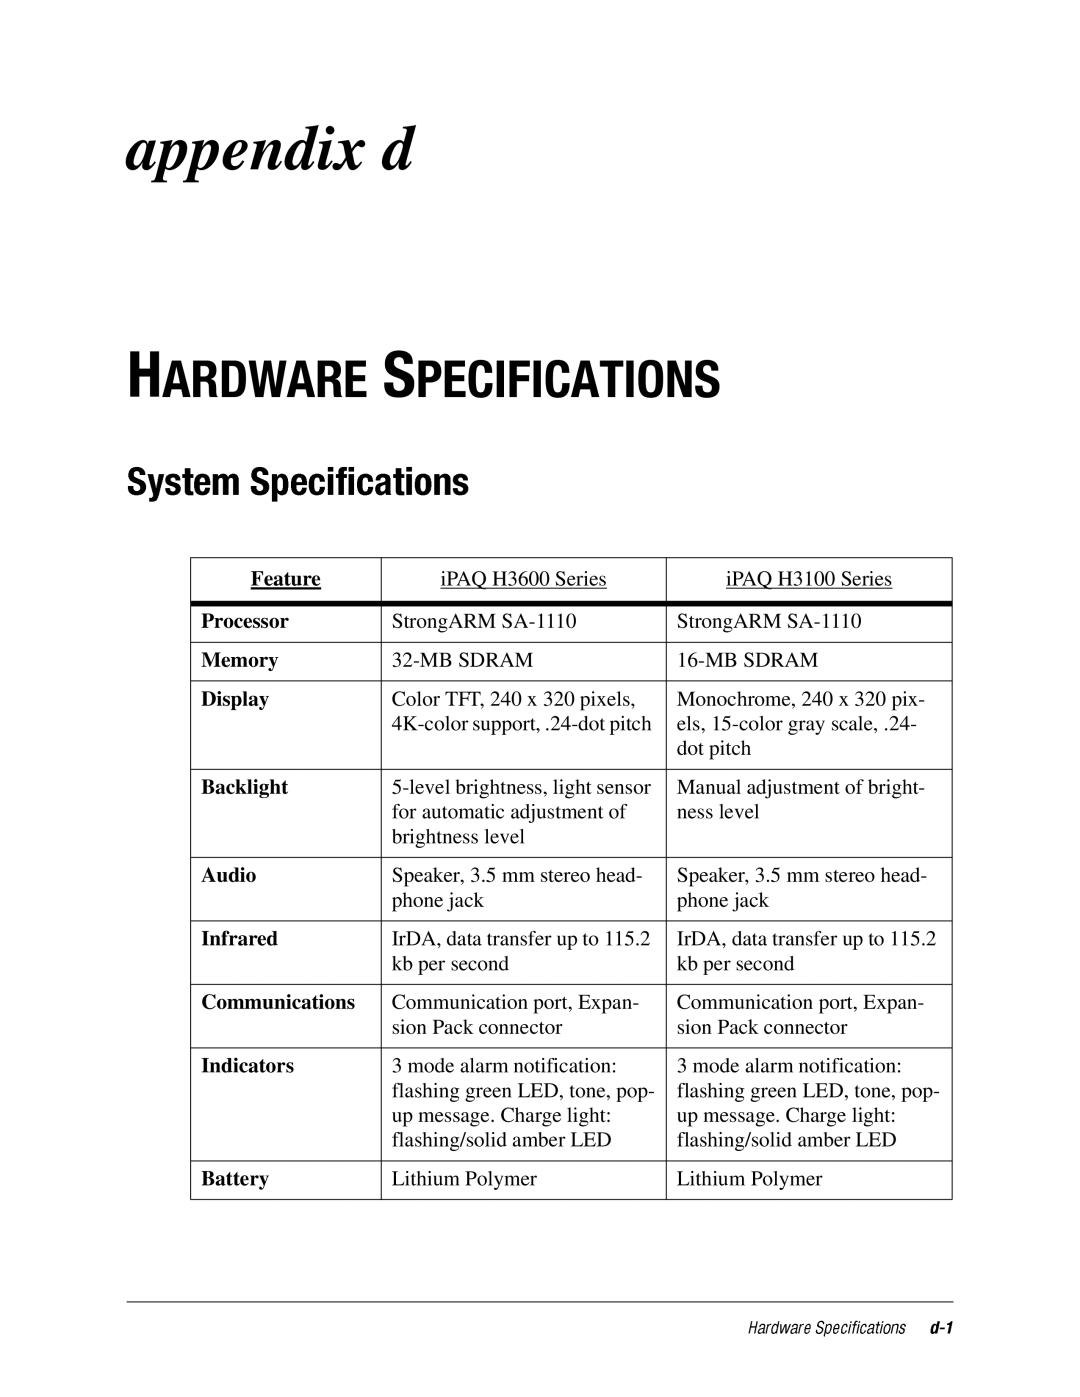 DeWalt IPAQ H3000 manual Feature, Processor, Display, Audio, Battery, Communications, Indicators 